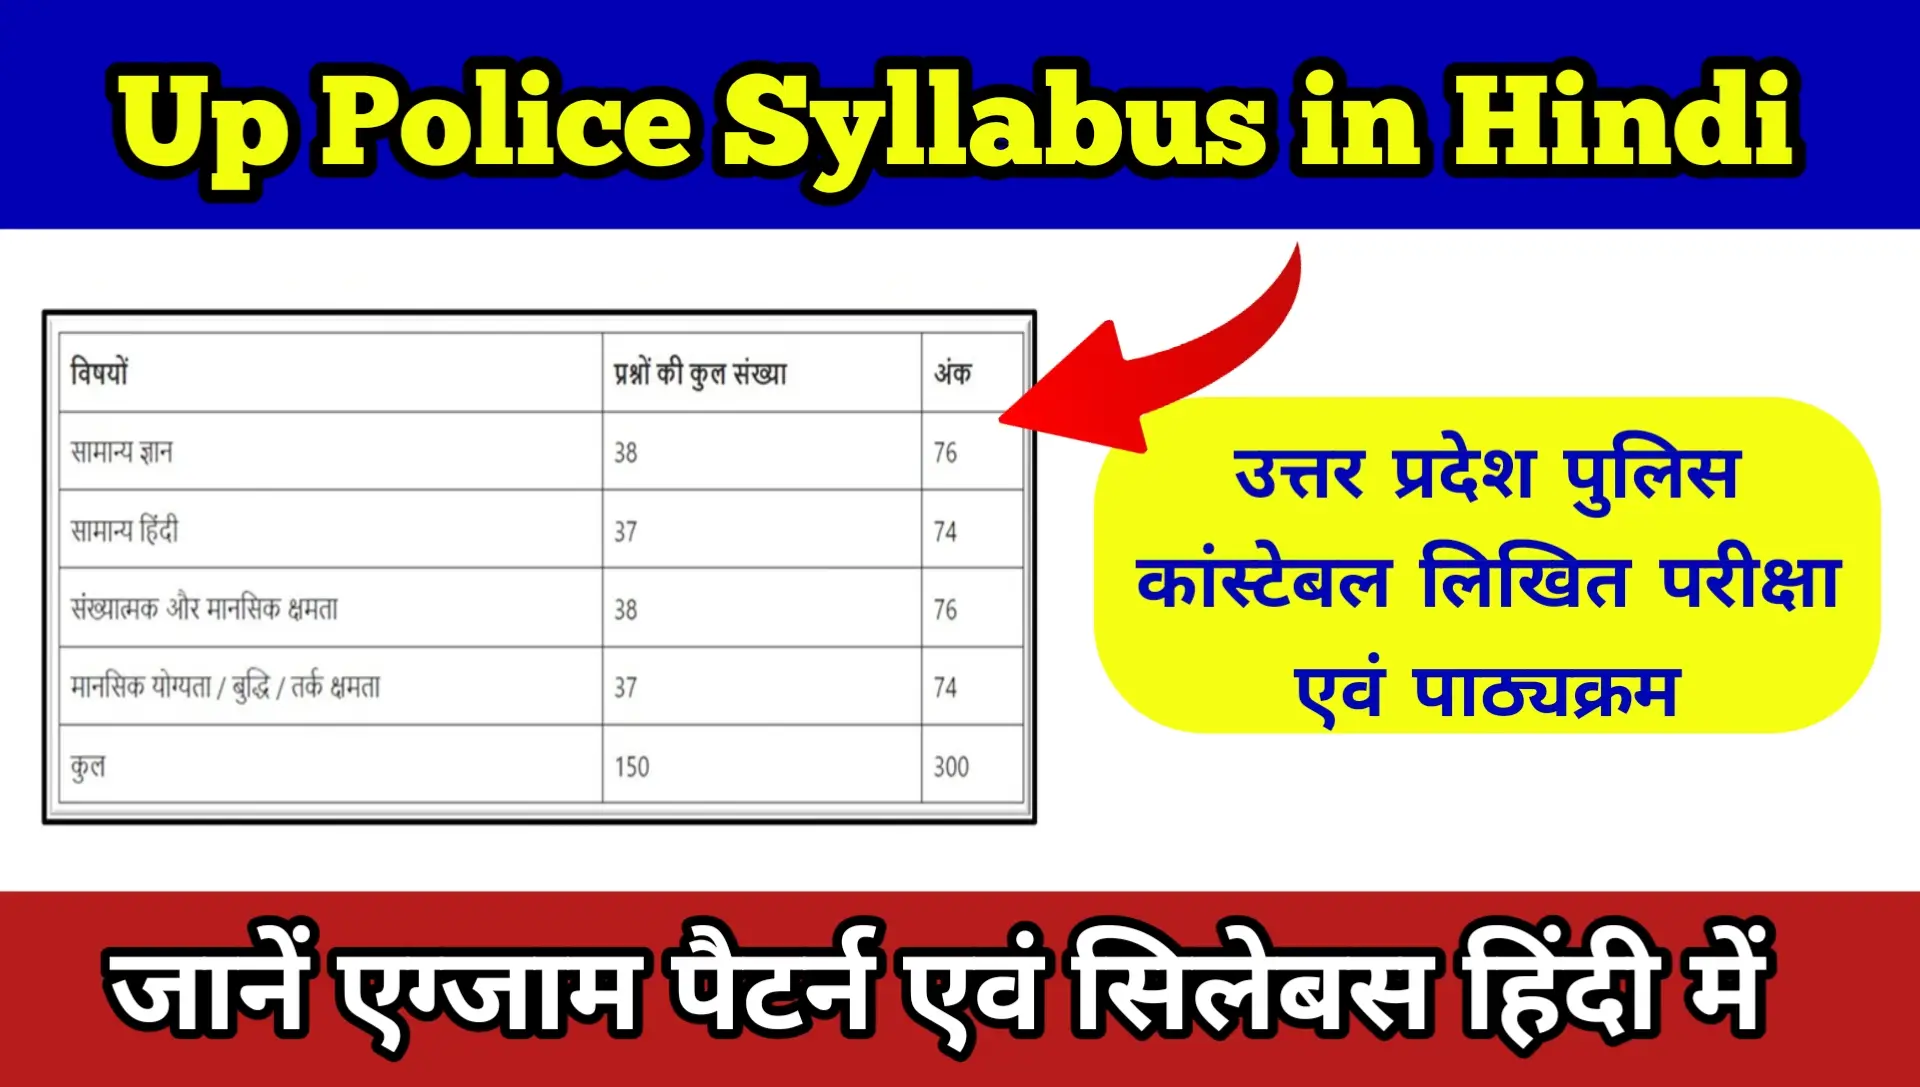 Up Police Syllabus in Hindi: